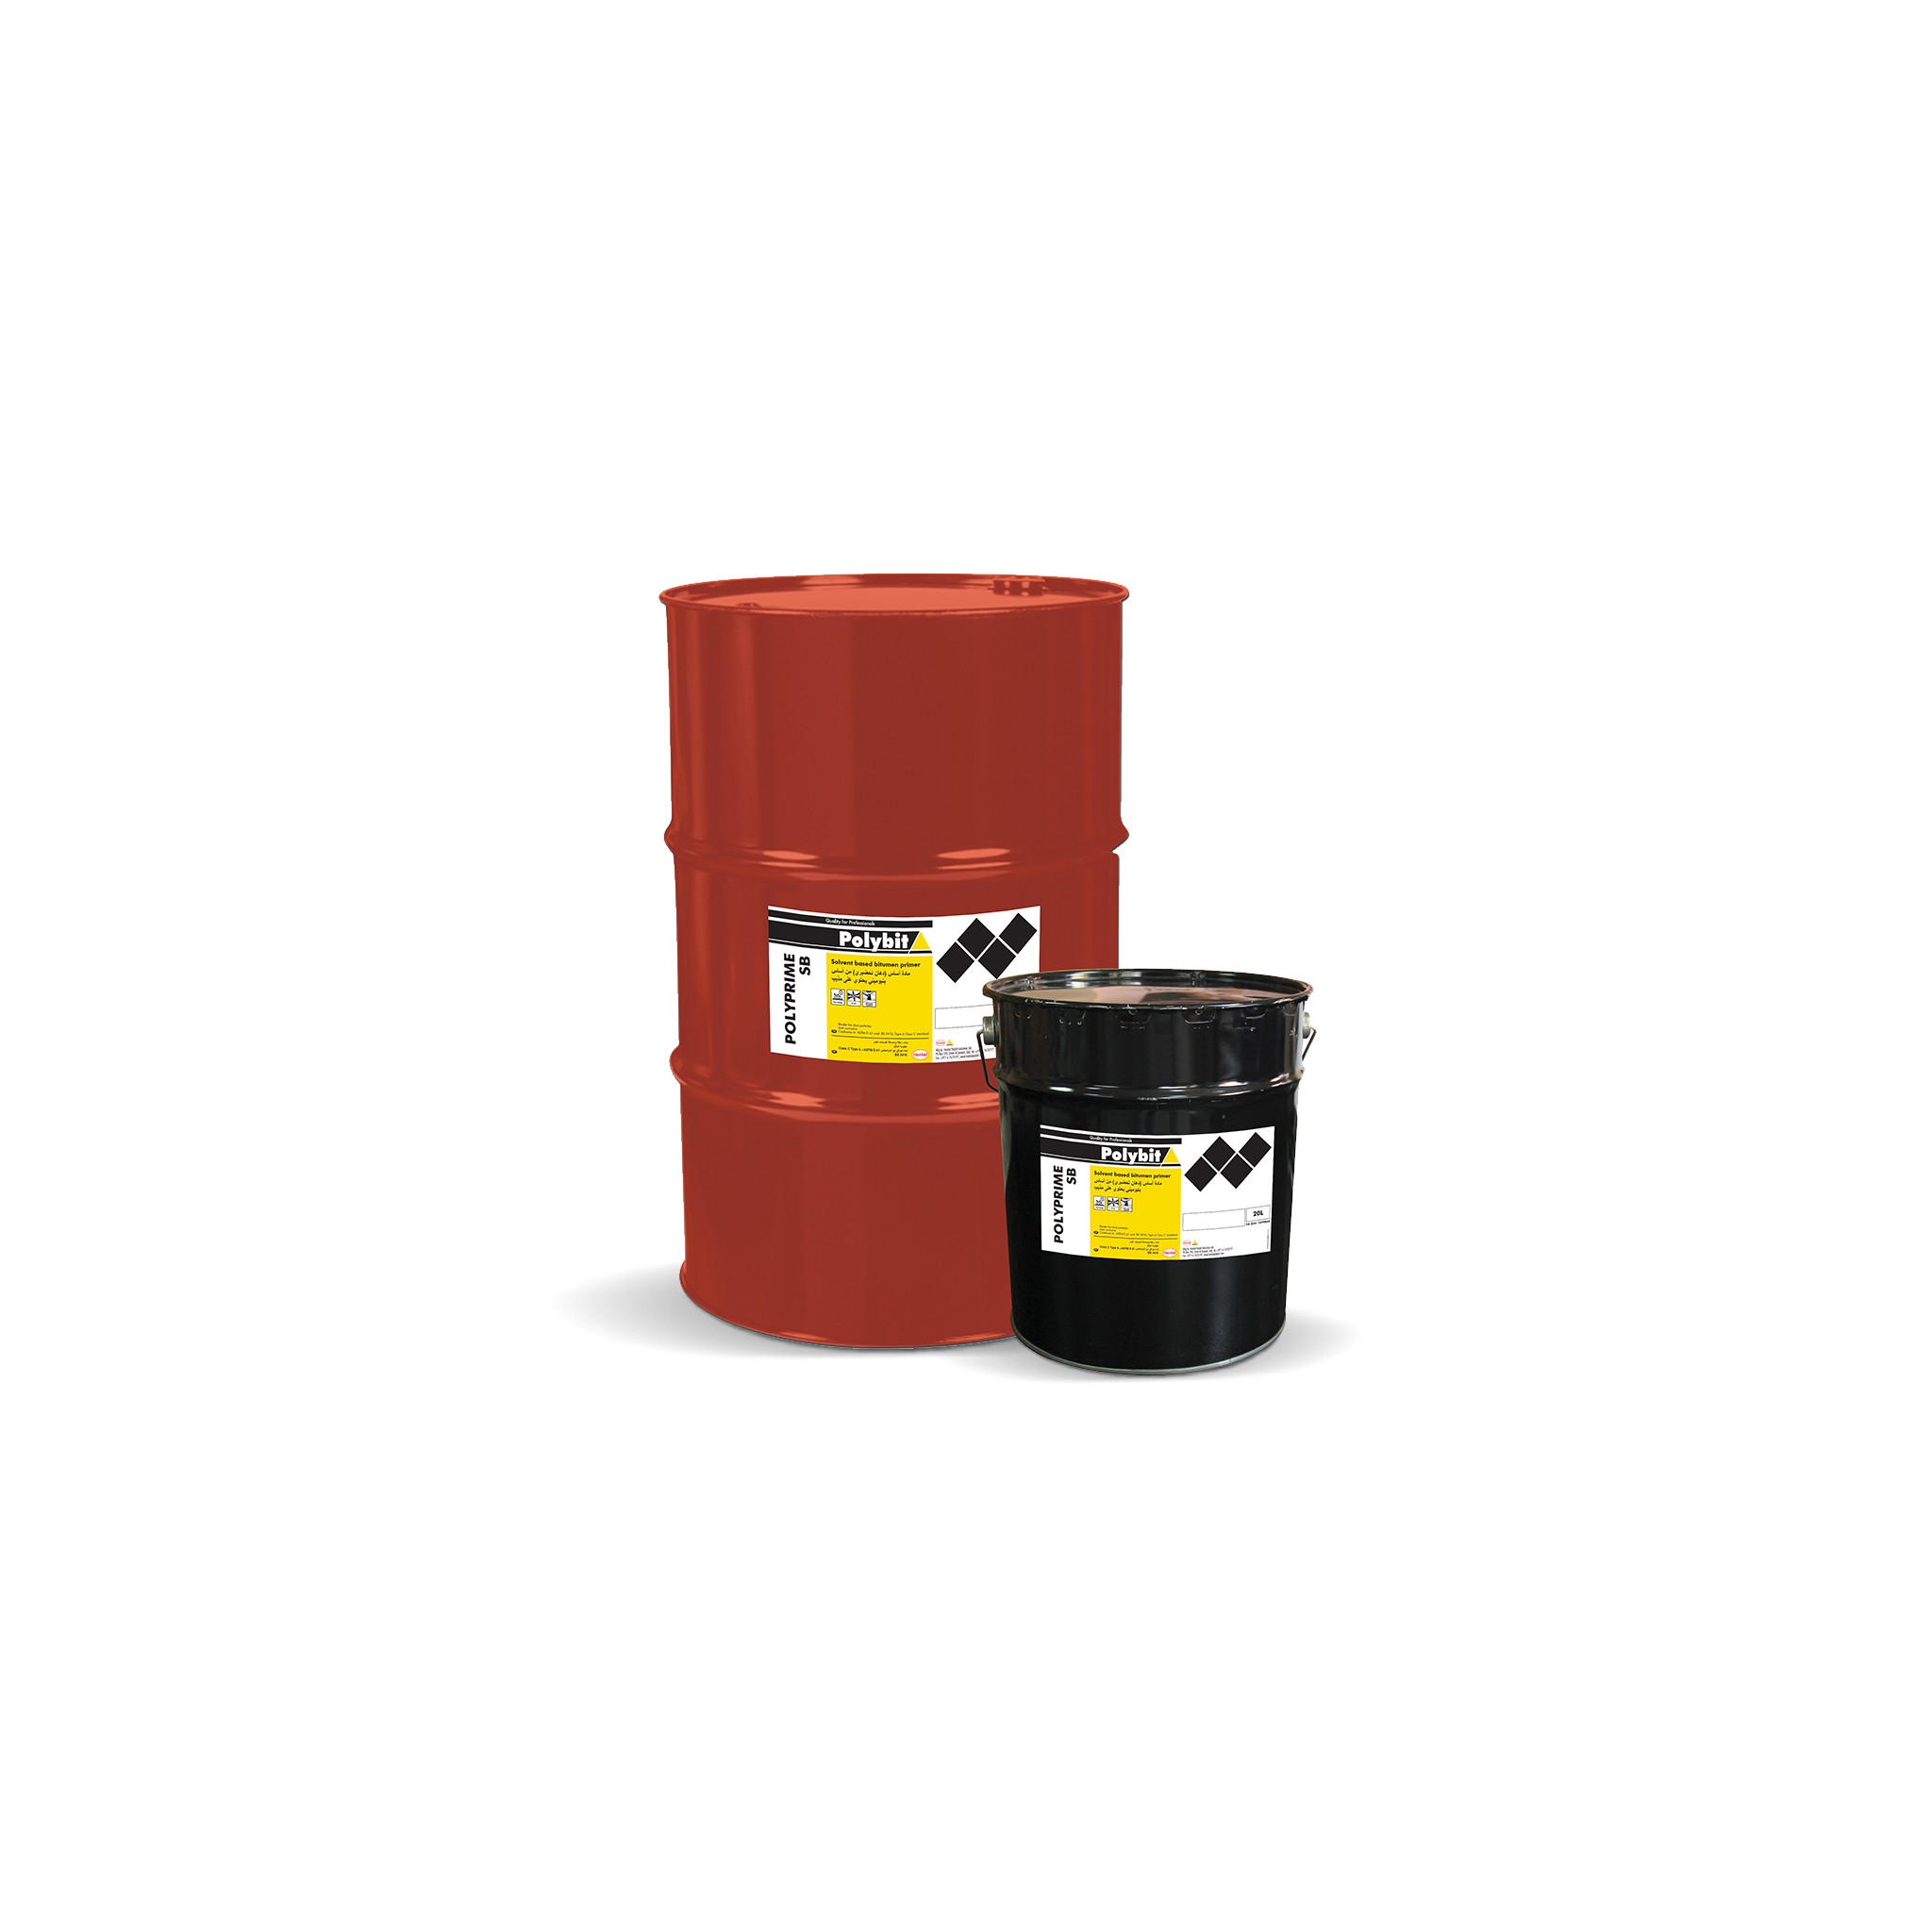 S-Polybond PVCprofi - Special adhesive for rigid PVC